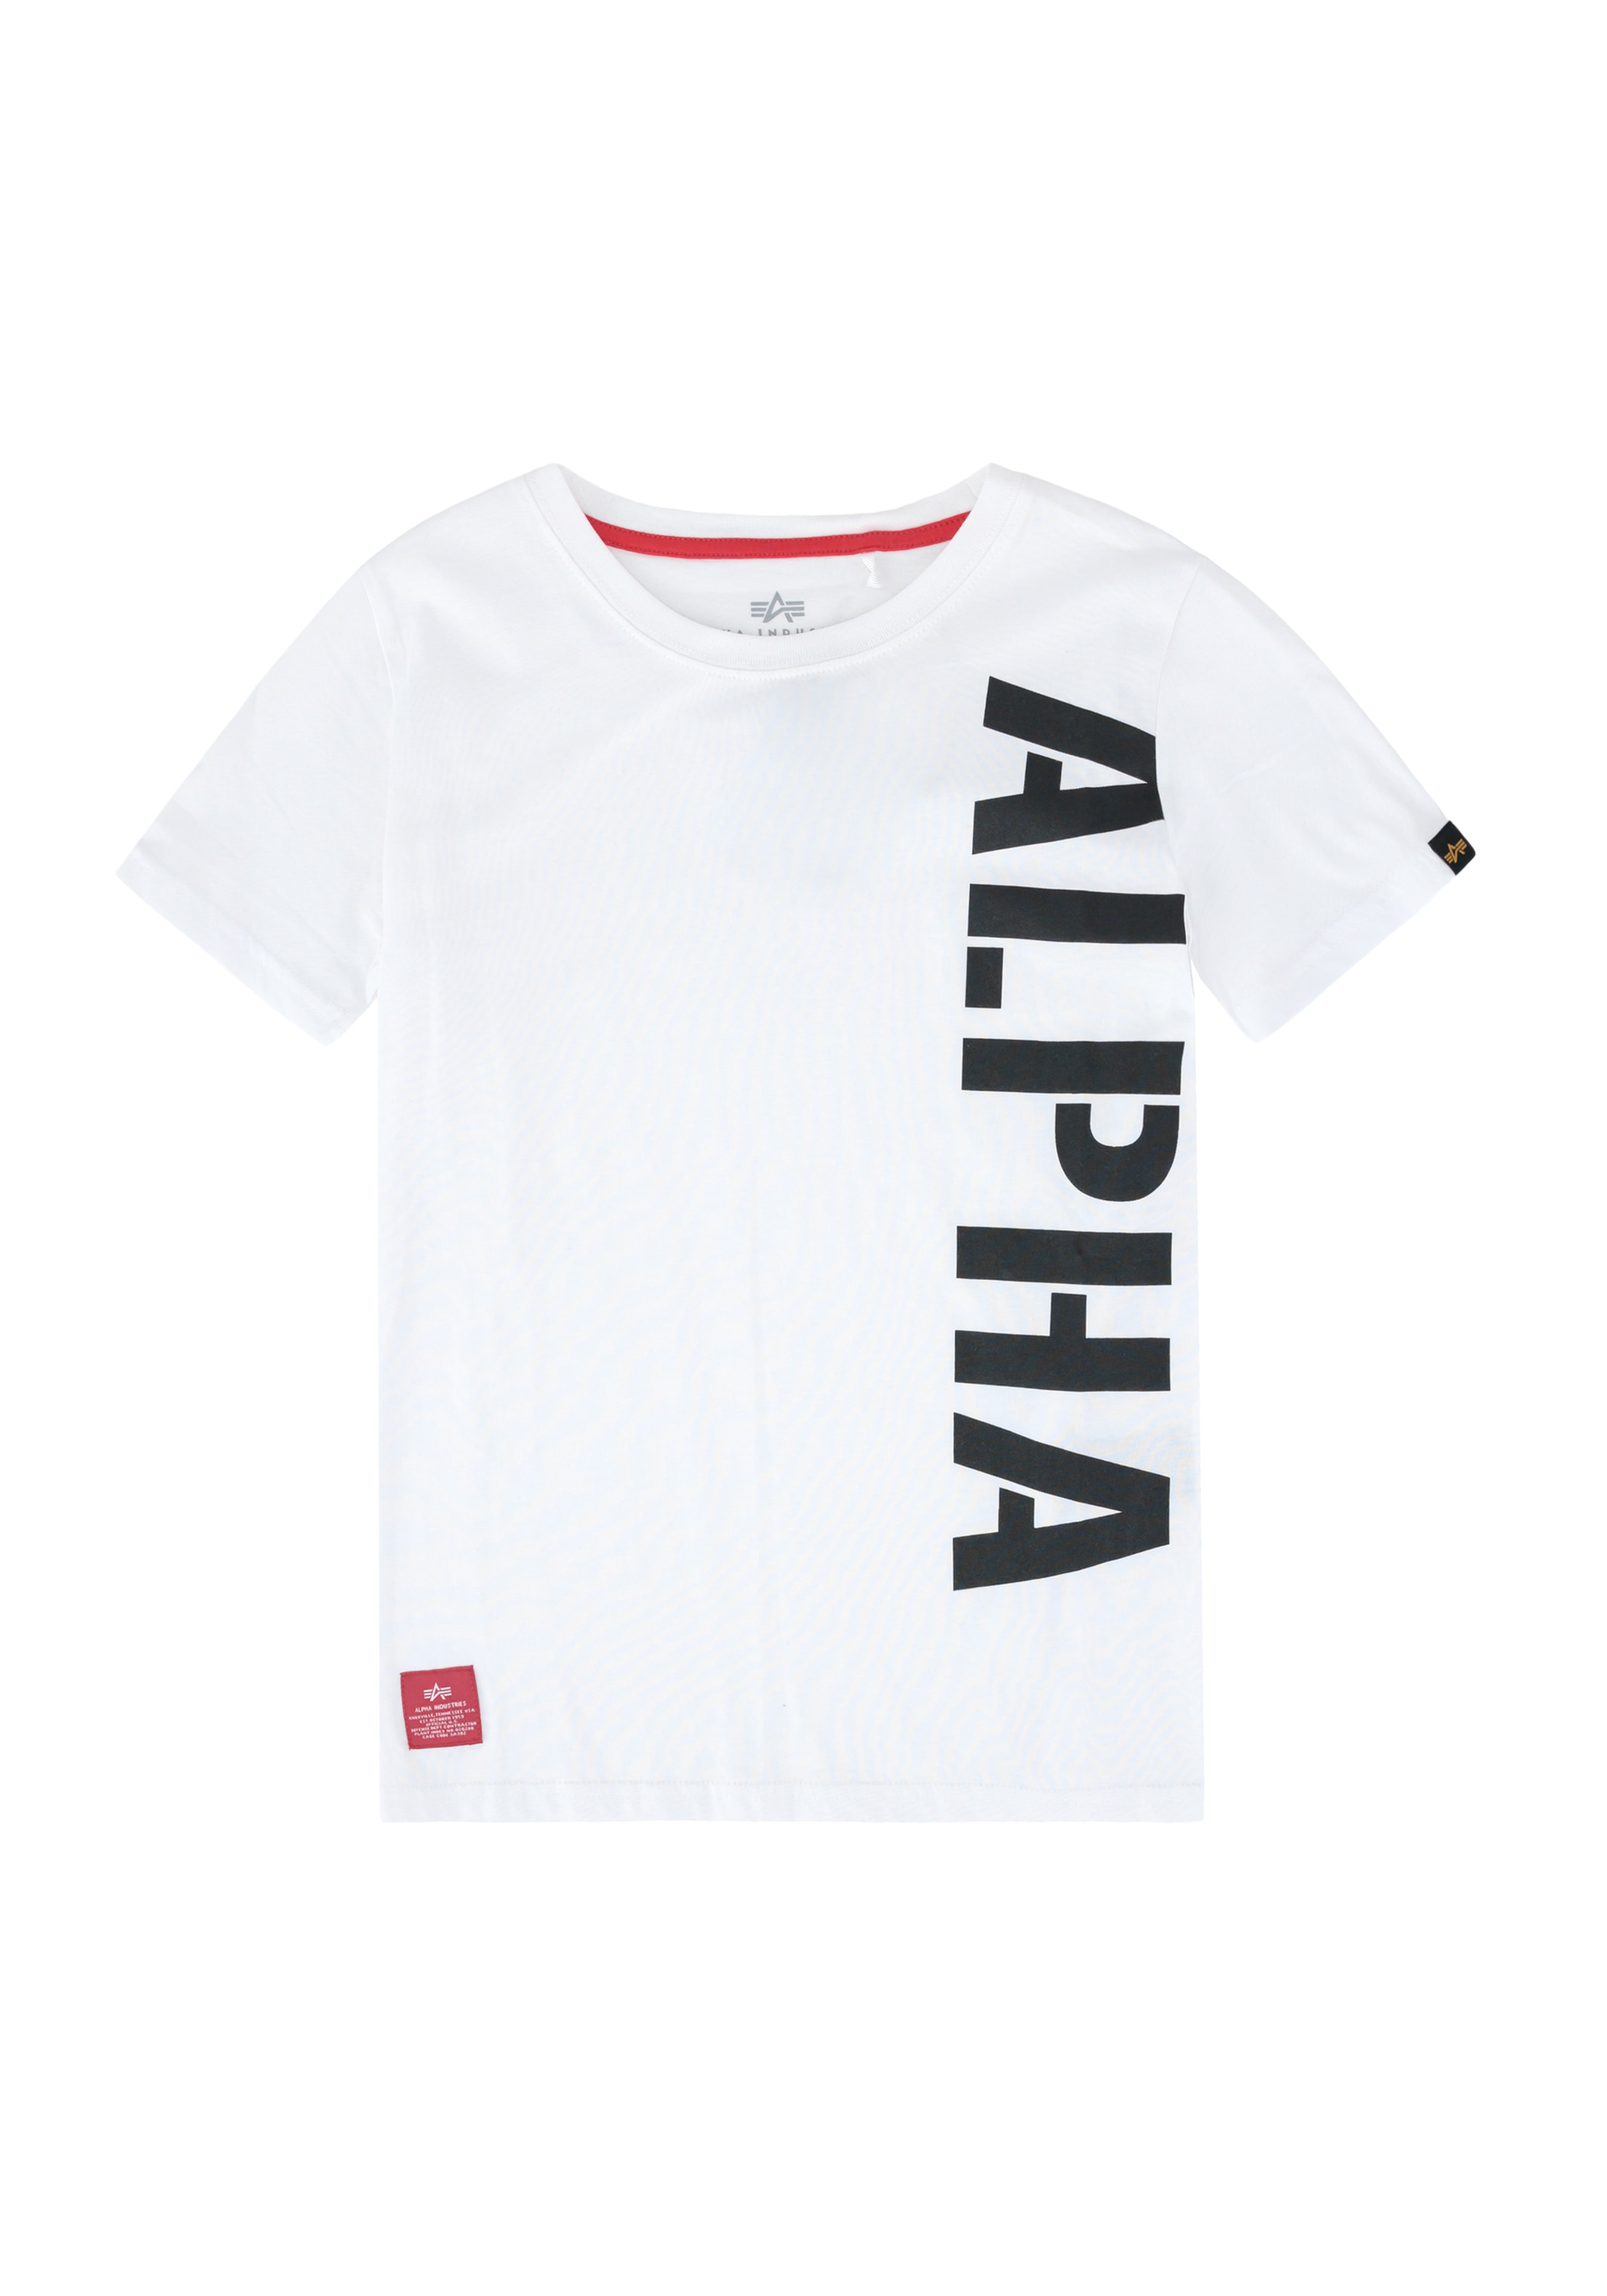 Alpha Industries - Side Industries Print sur T-Shirt »Alpha Kids Trouver T Kids/Teens« T-Shirts